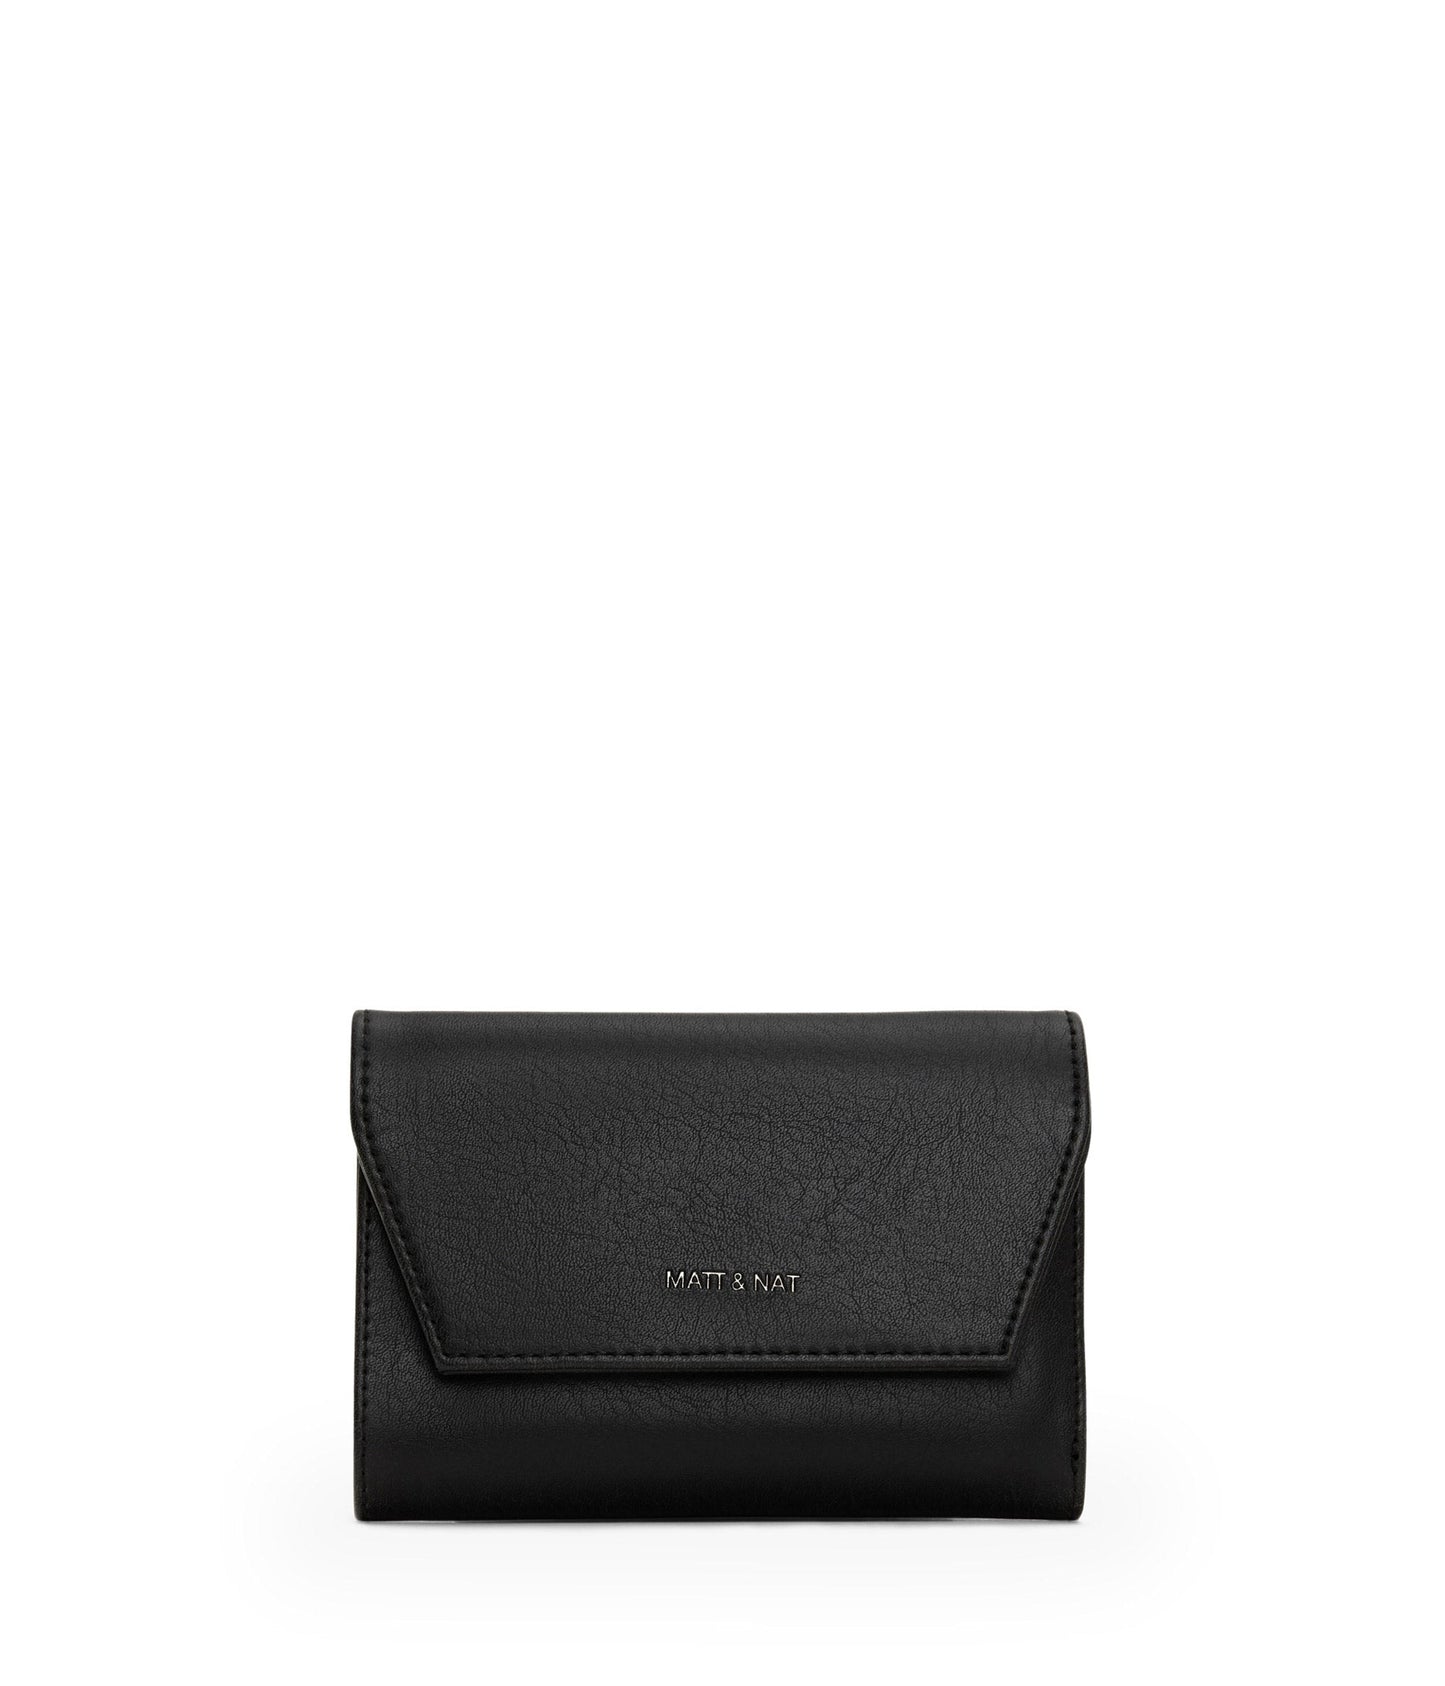 VERASM Small Vegan Wallet - Vintage | Color: Black - variant::black